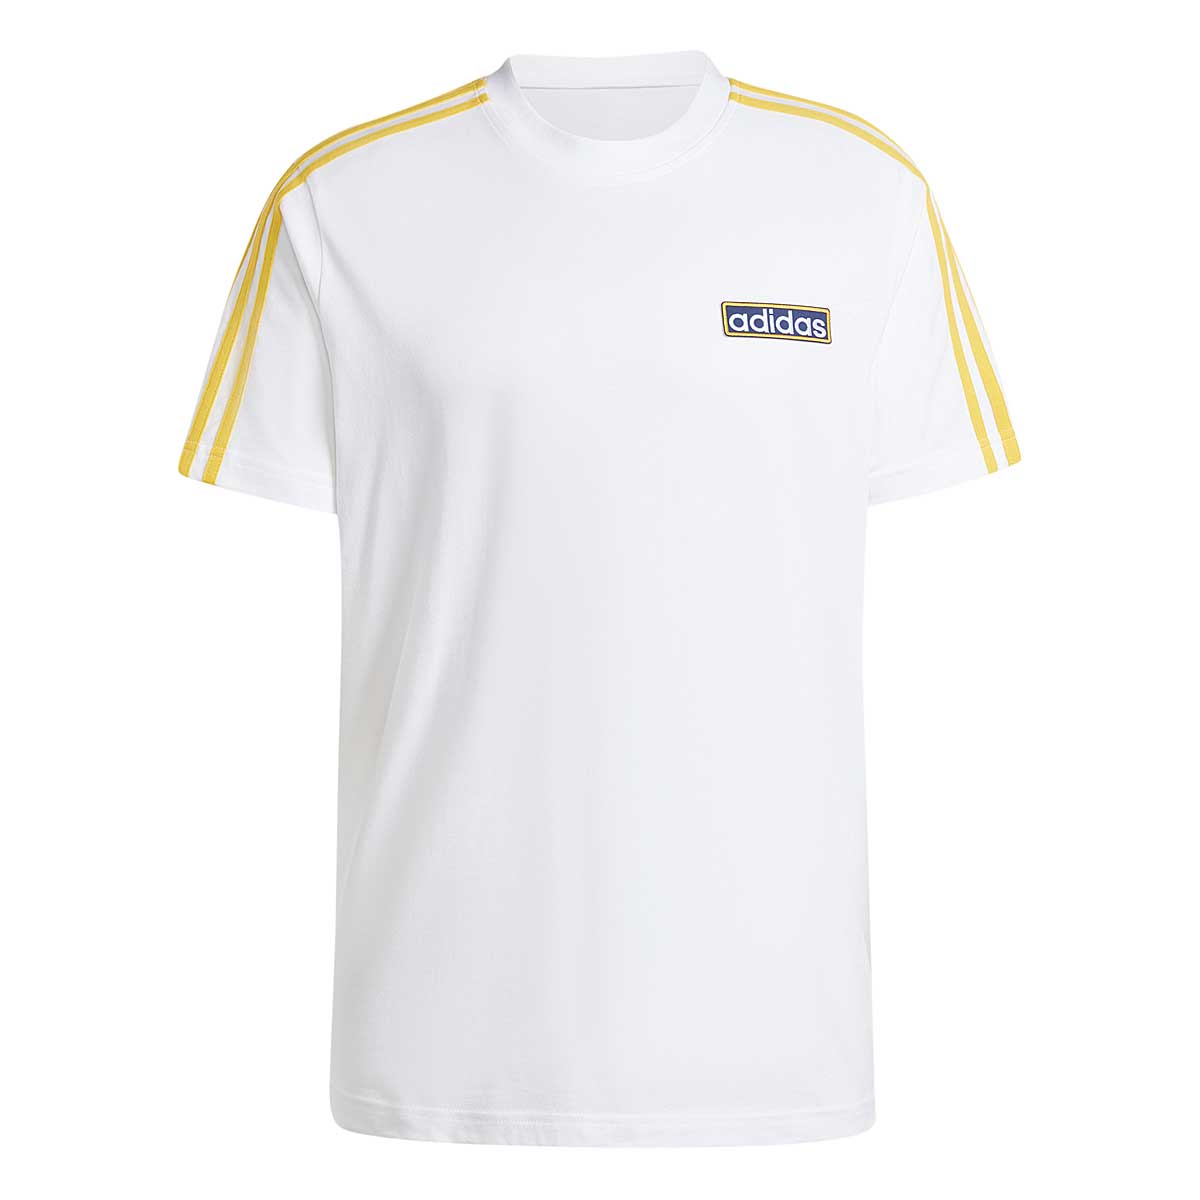 Adidas Adibreak T-shirt, White 2XL